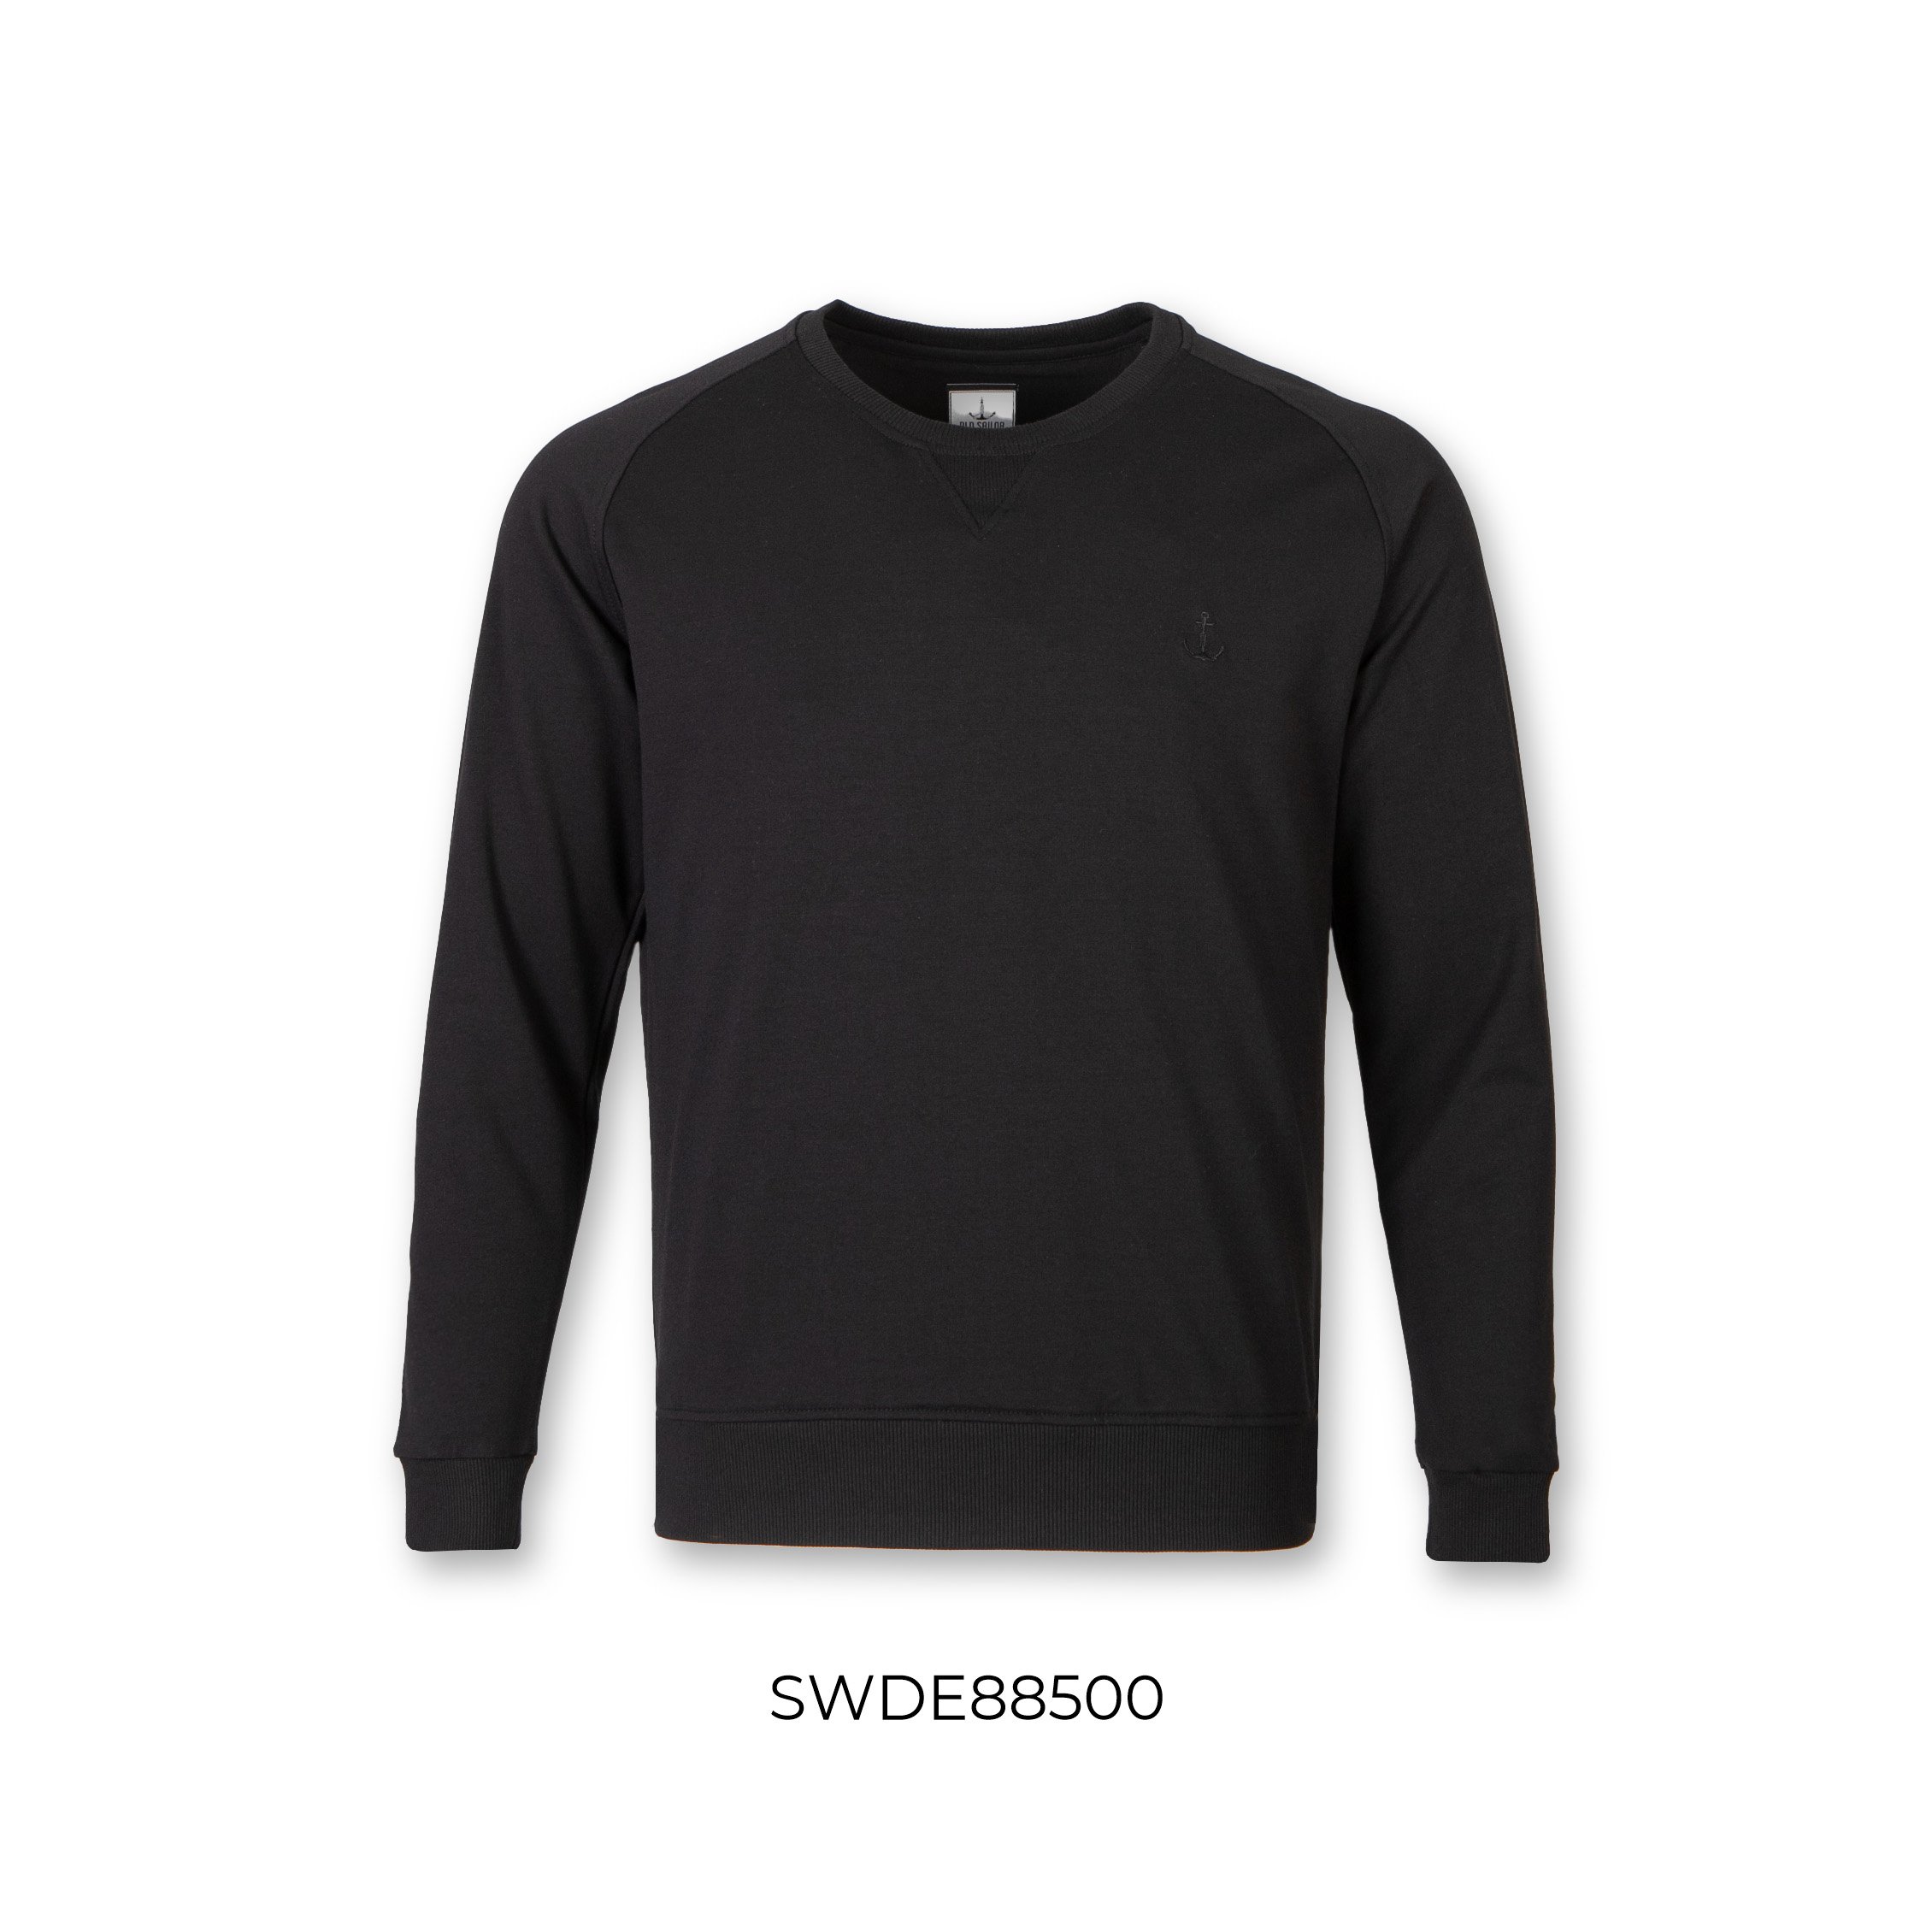 Áo sweater nam Old Sailor - O.S.L SWEATER BASIC - BLACK - SWDE88500 - đen - Big size upto 5XL